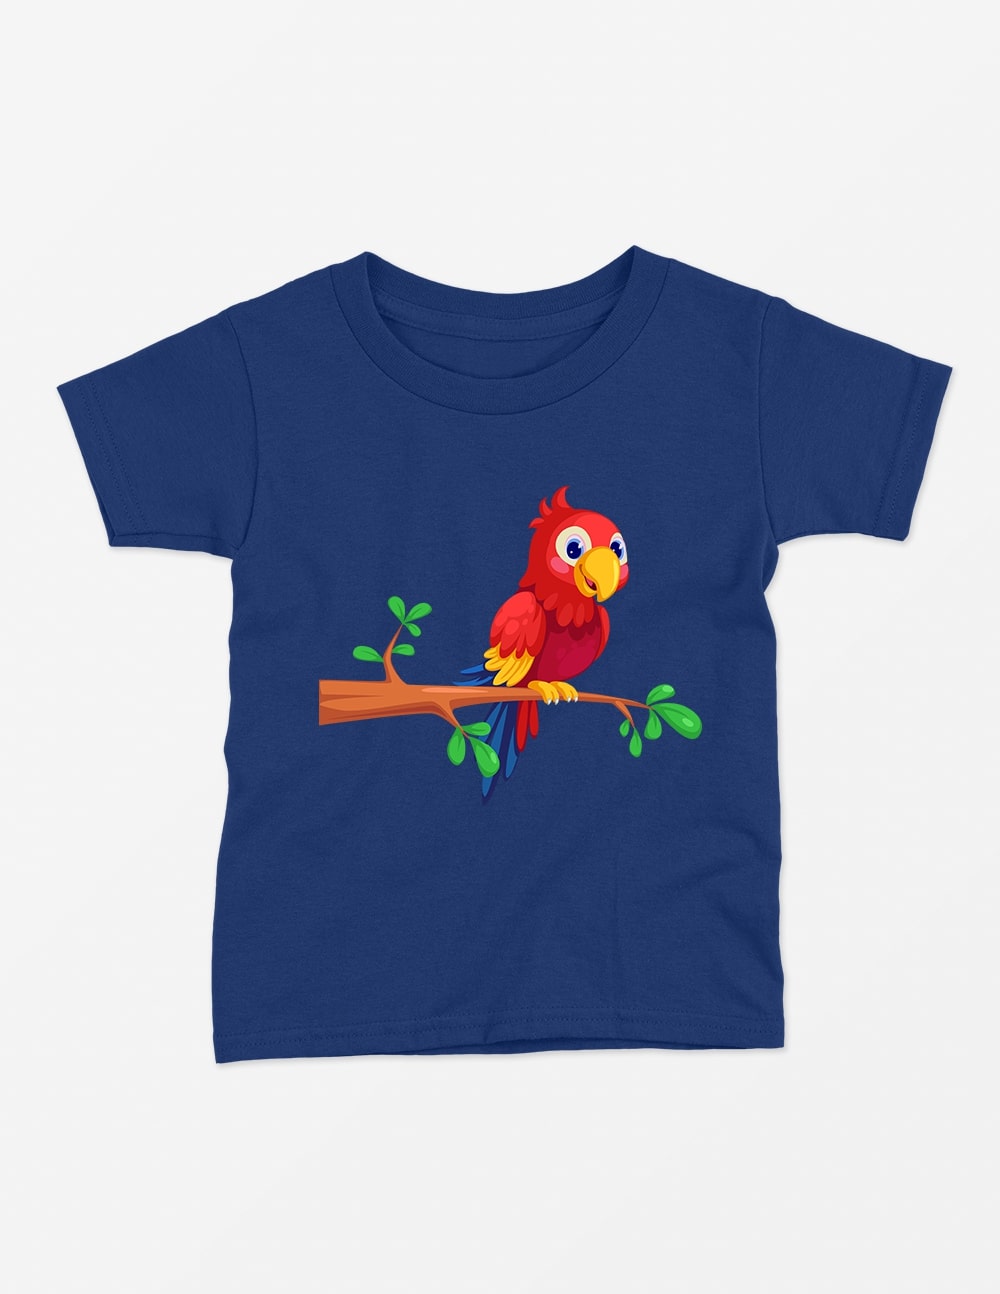 Parrot navy blue Tshirt